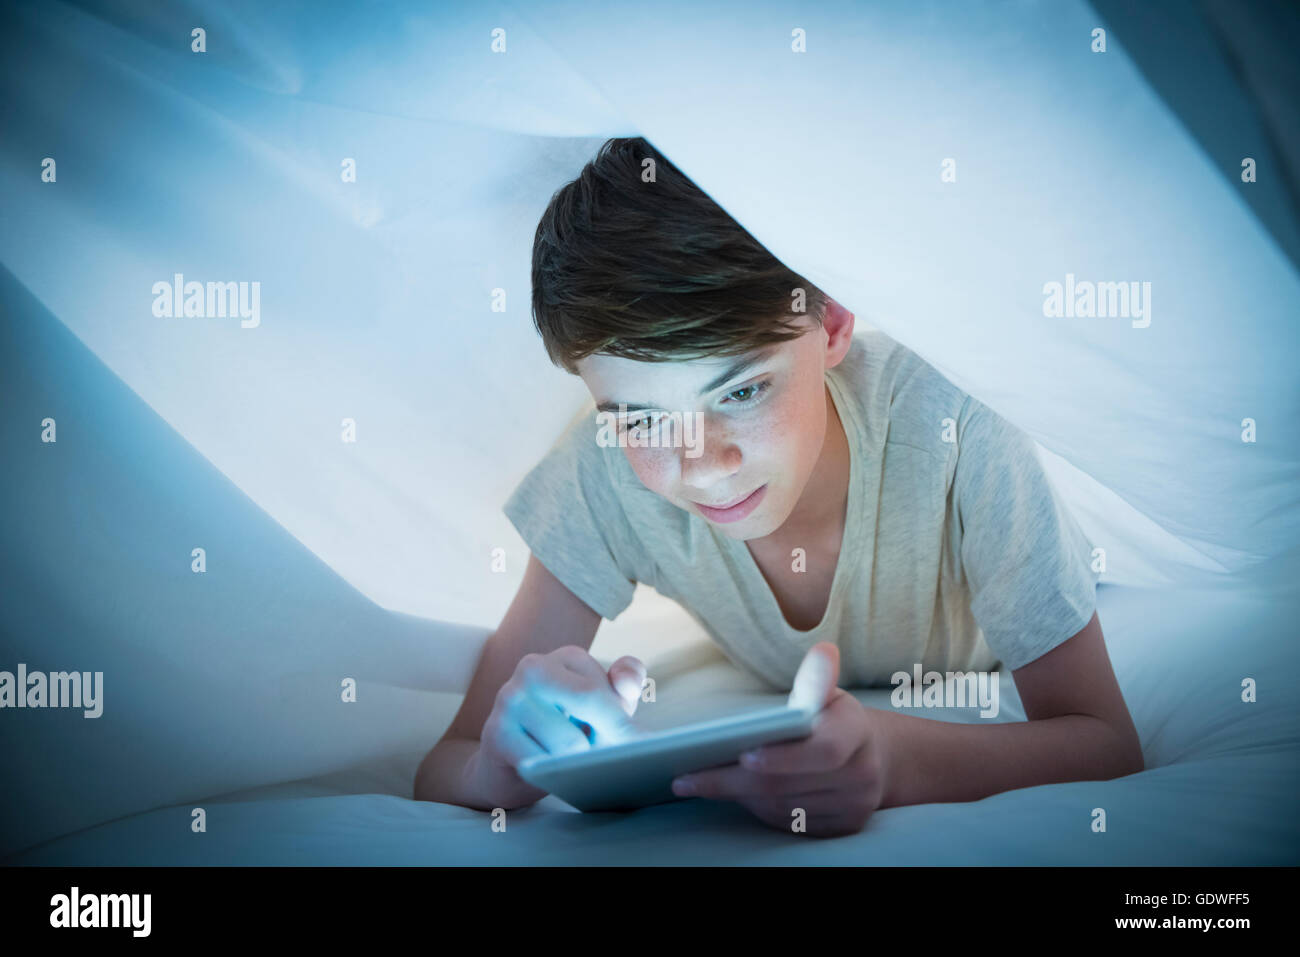 Boy using digital tablet under sheet Stock Photo